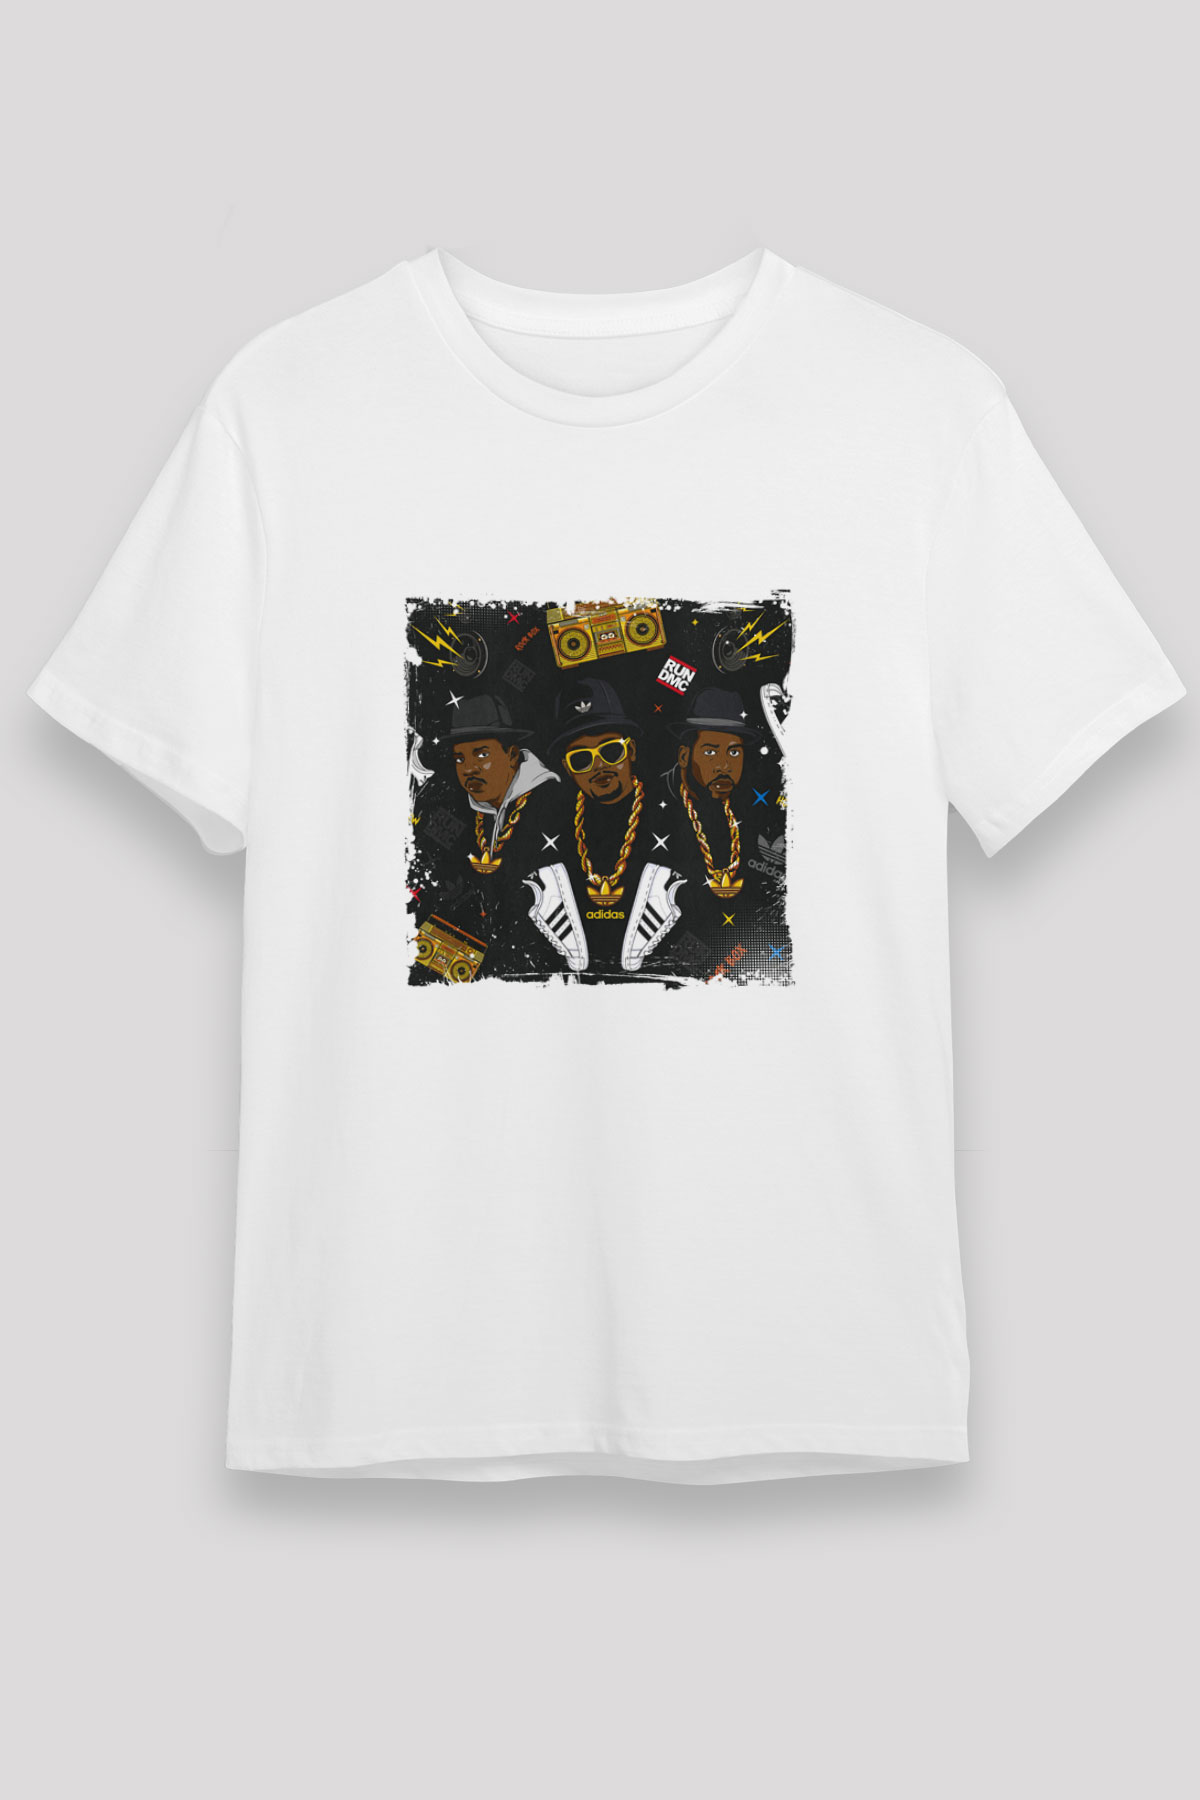 Run DMC T shirt,Hip Hop,Rap Tshirt 06